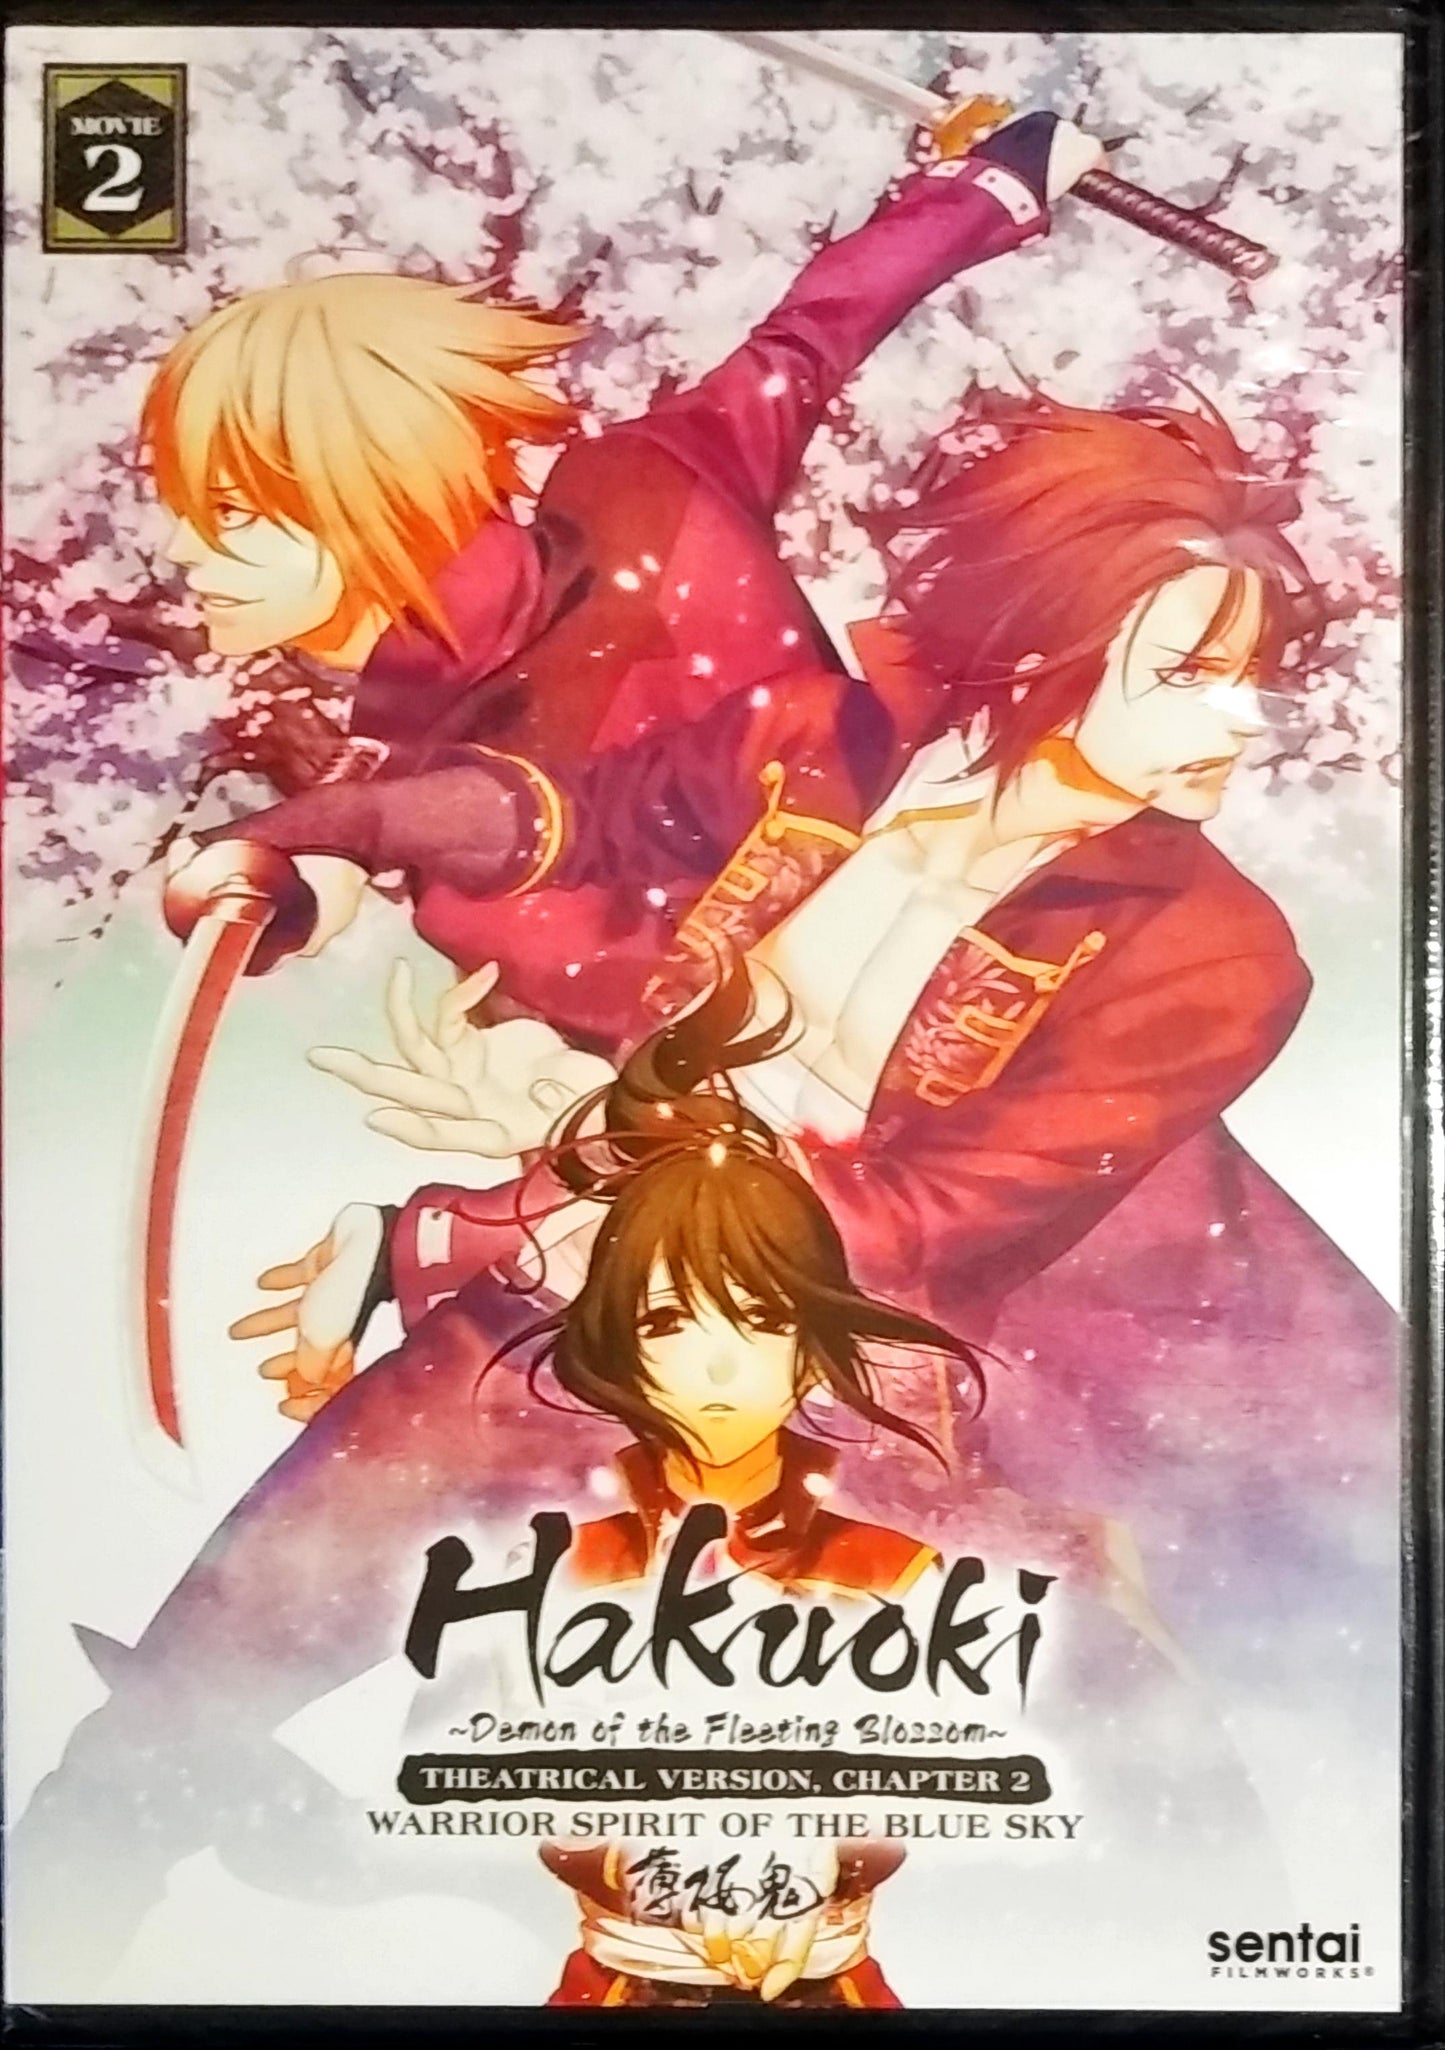 Hakuoki - Theatrical Version, DVD Chapter 2: Warrior Spirit of The Blue Sky